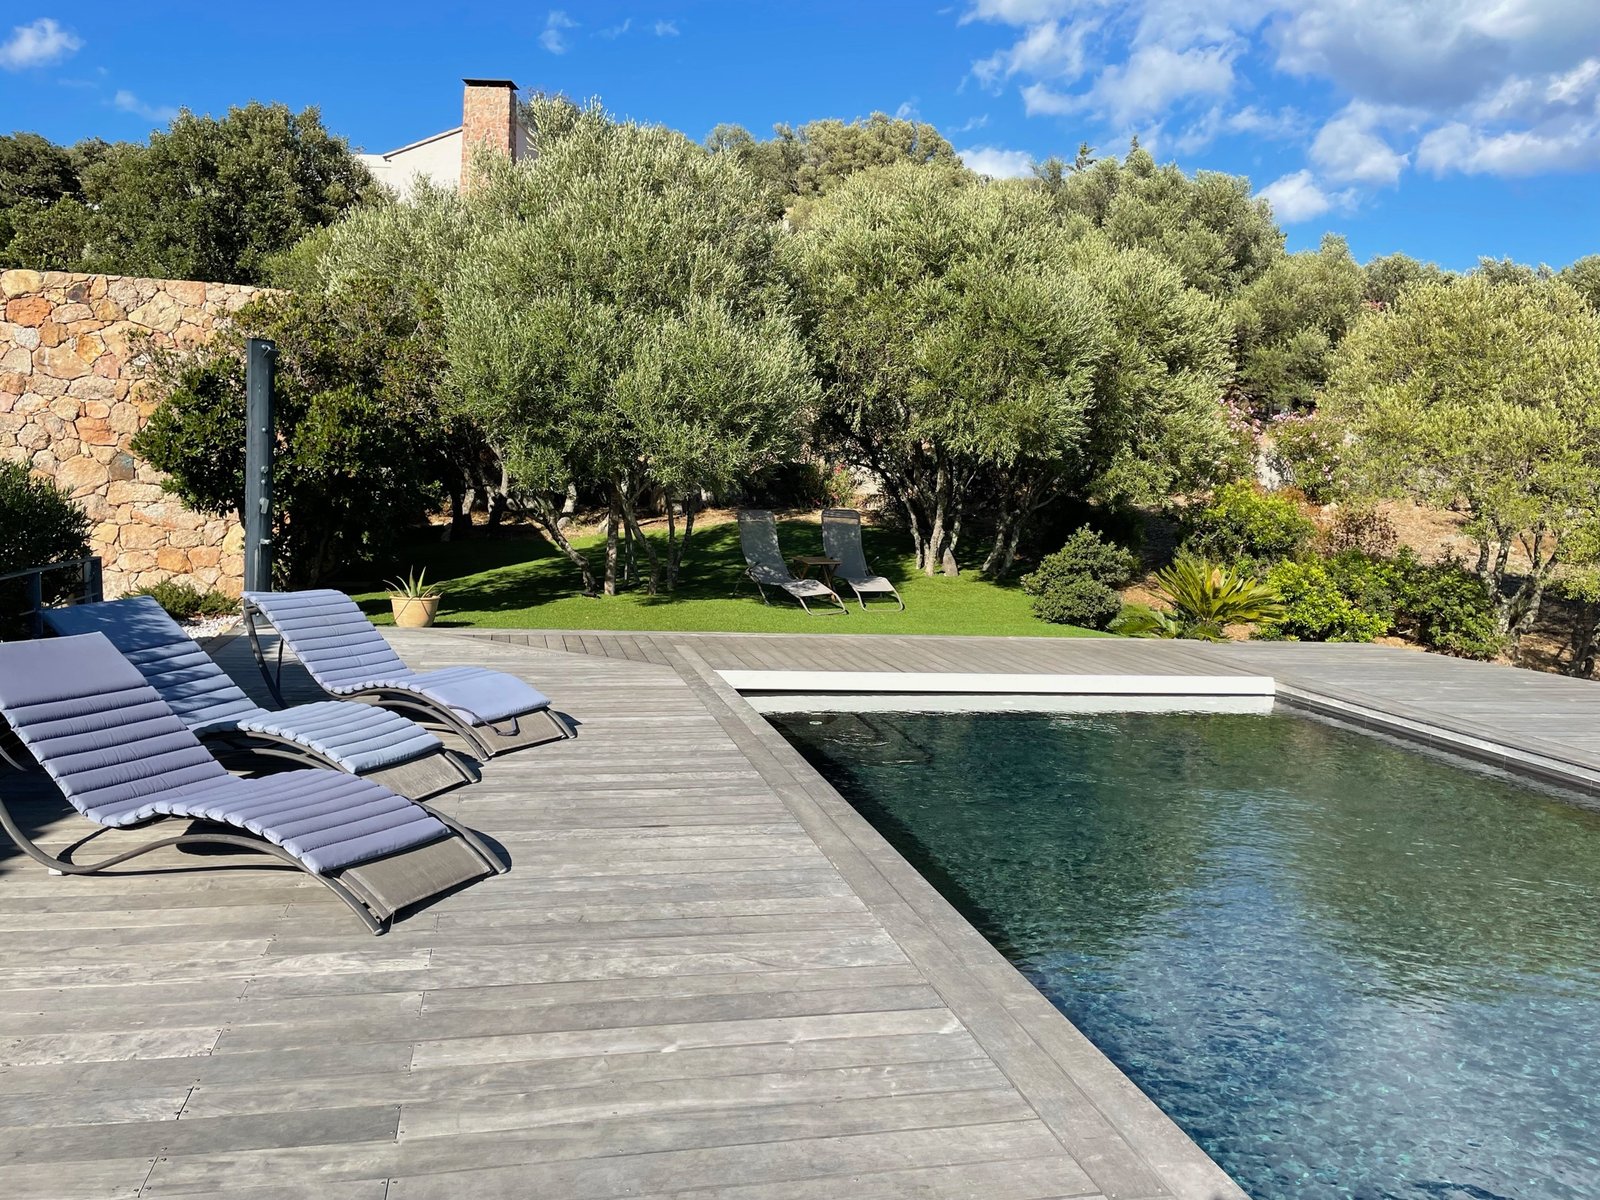 Location villa luxe Porto-Vecchio en Corse du sud 5 chambres piscine proche plage St Cyprien et Cala Rossa climatisation